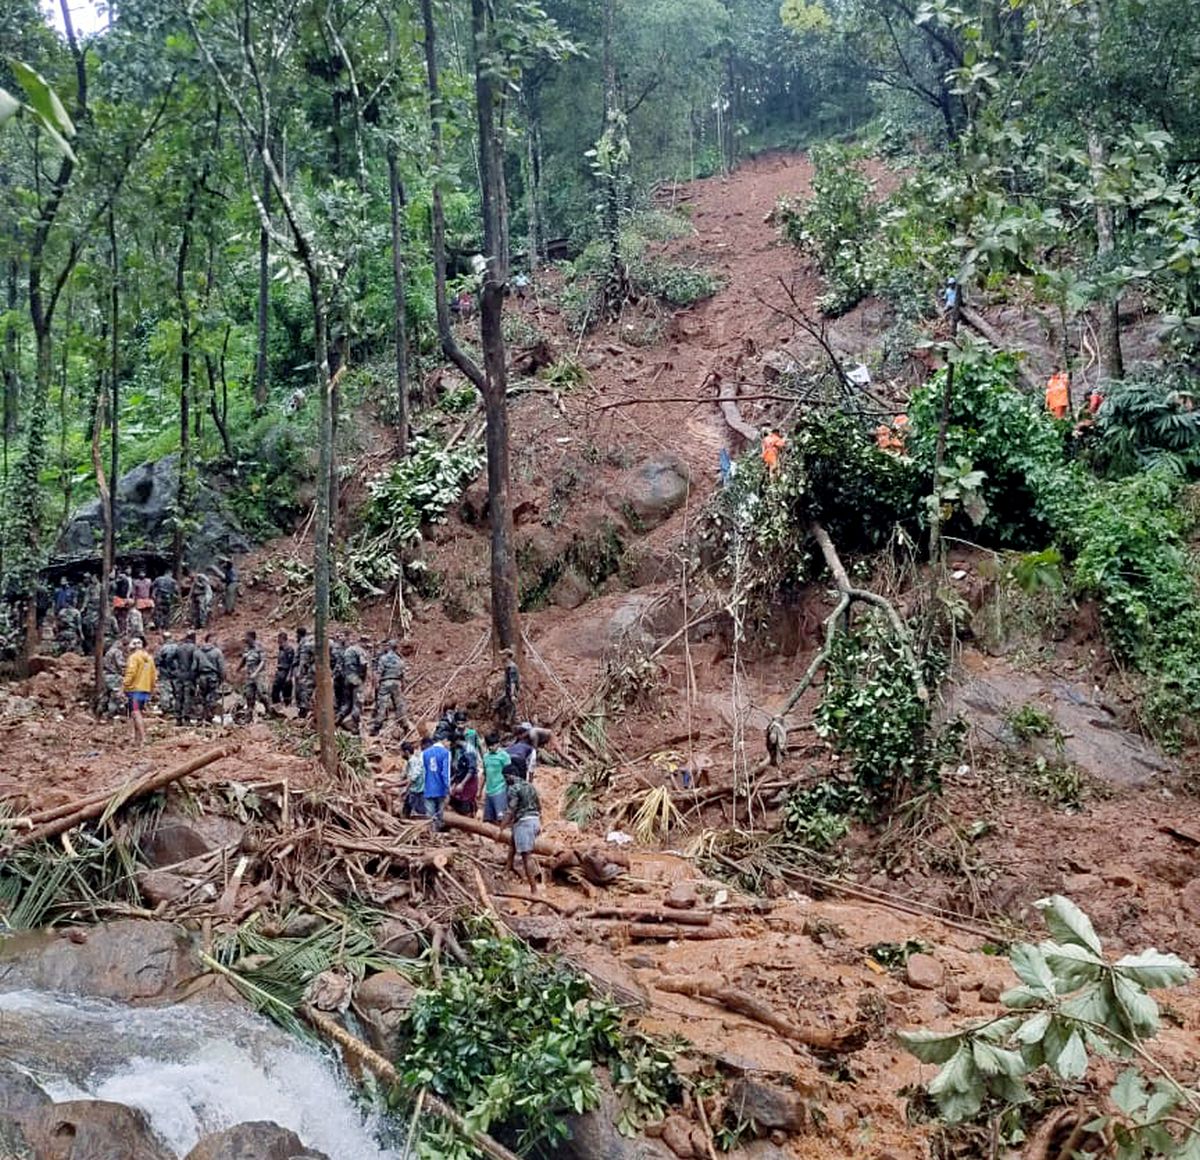 Floods in Kerala caused by mini cloudburst: Expert